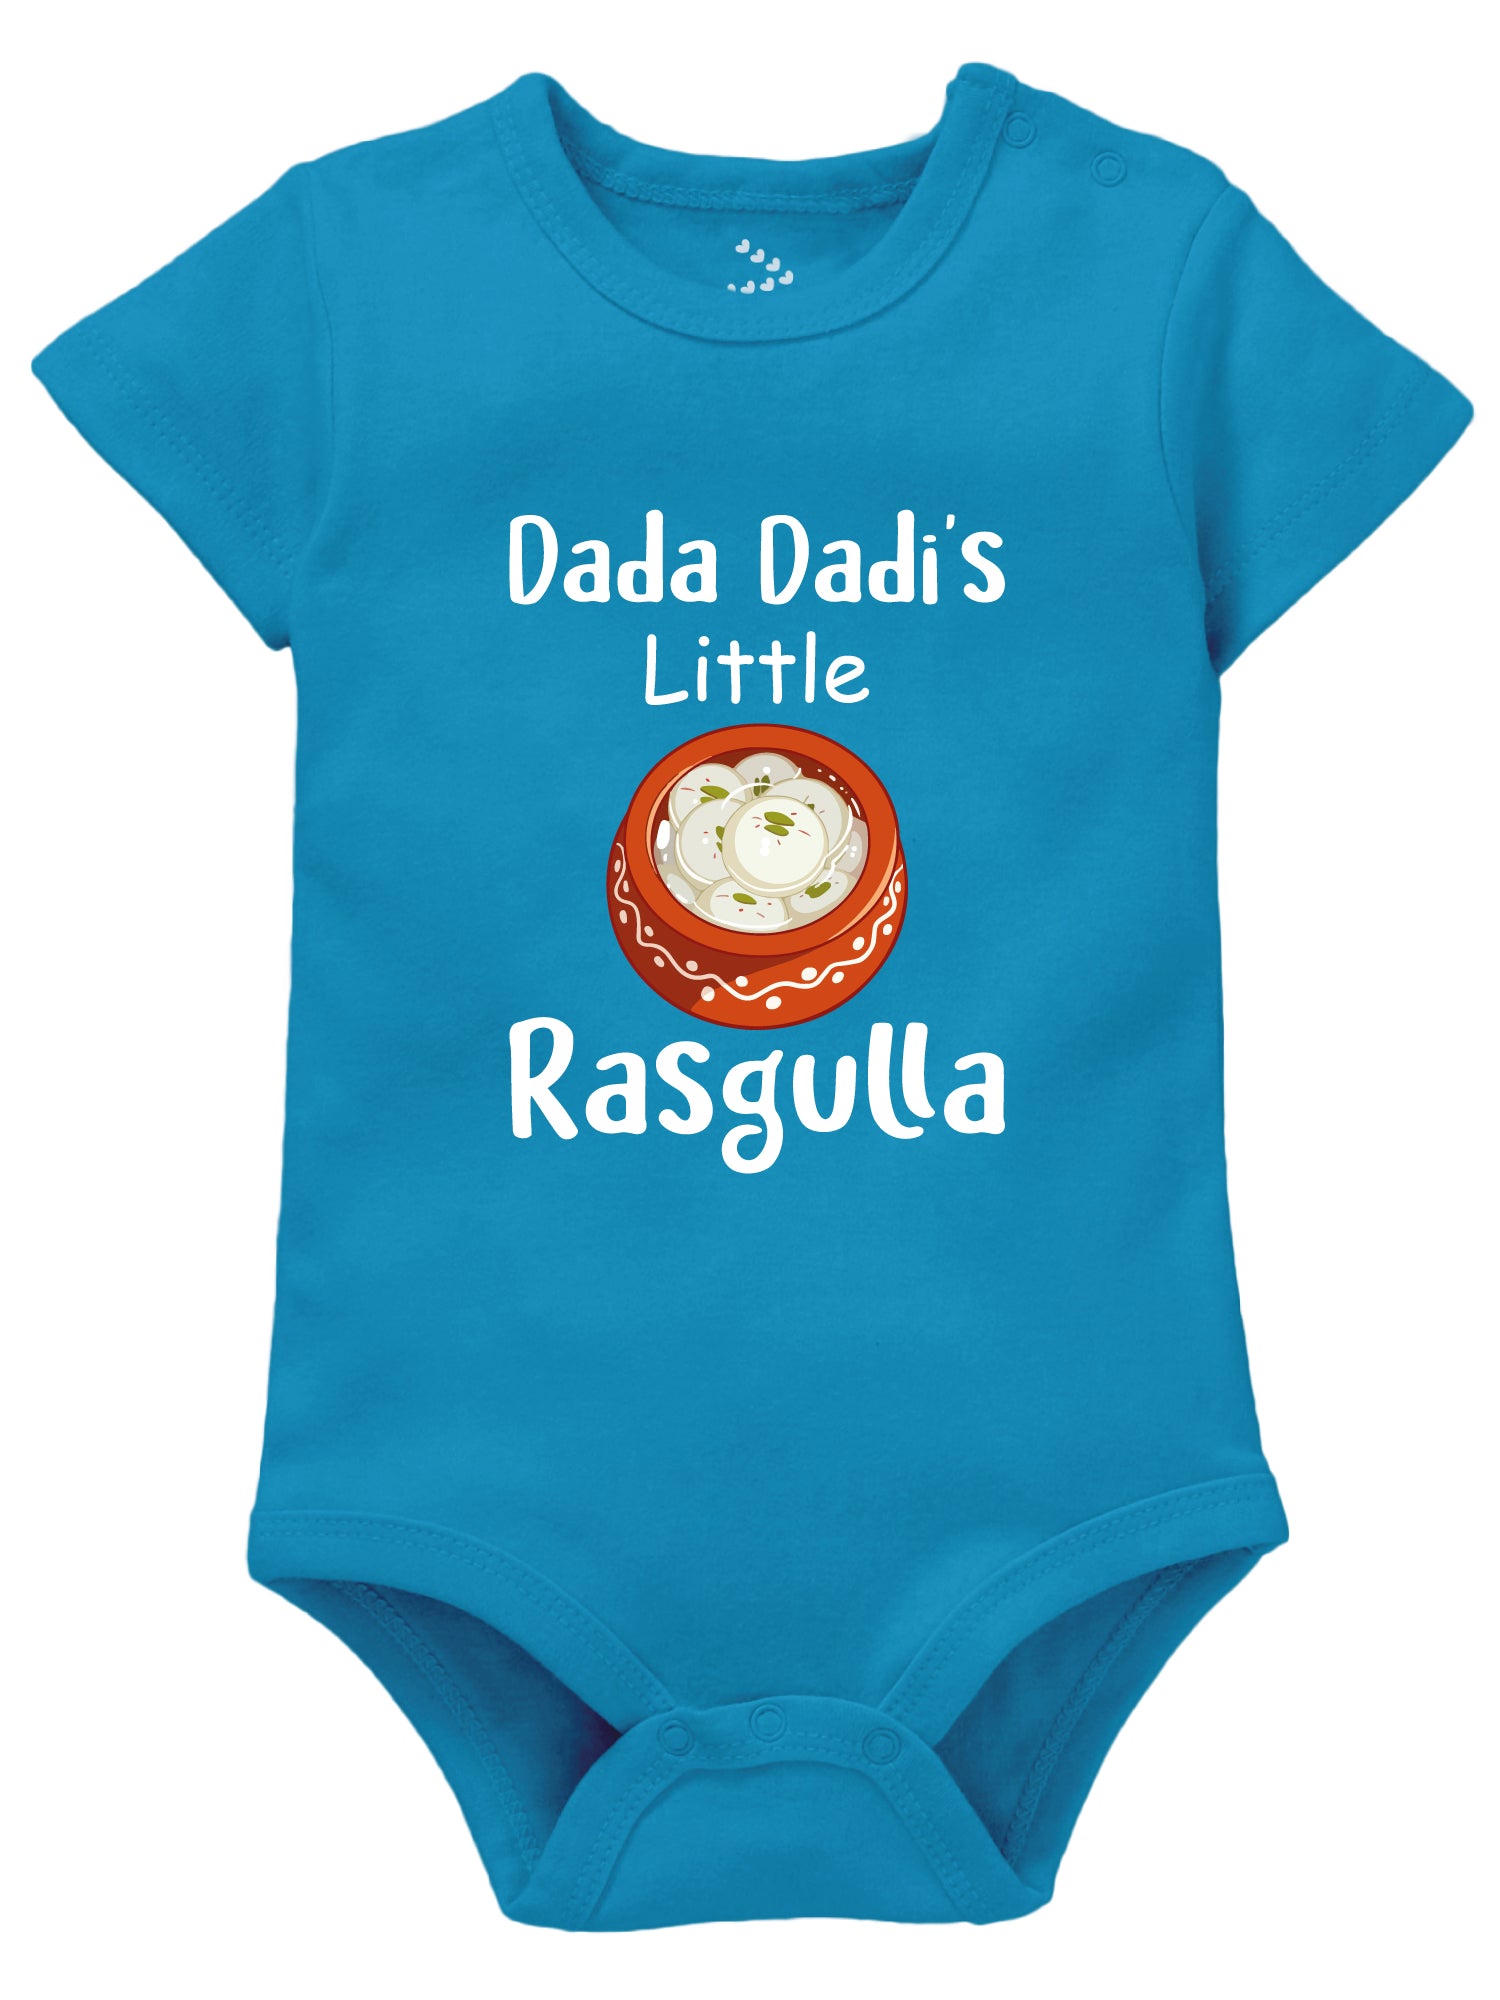 Dada Dadis Little Rasgulla - Onesie